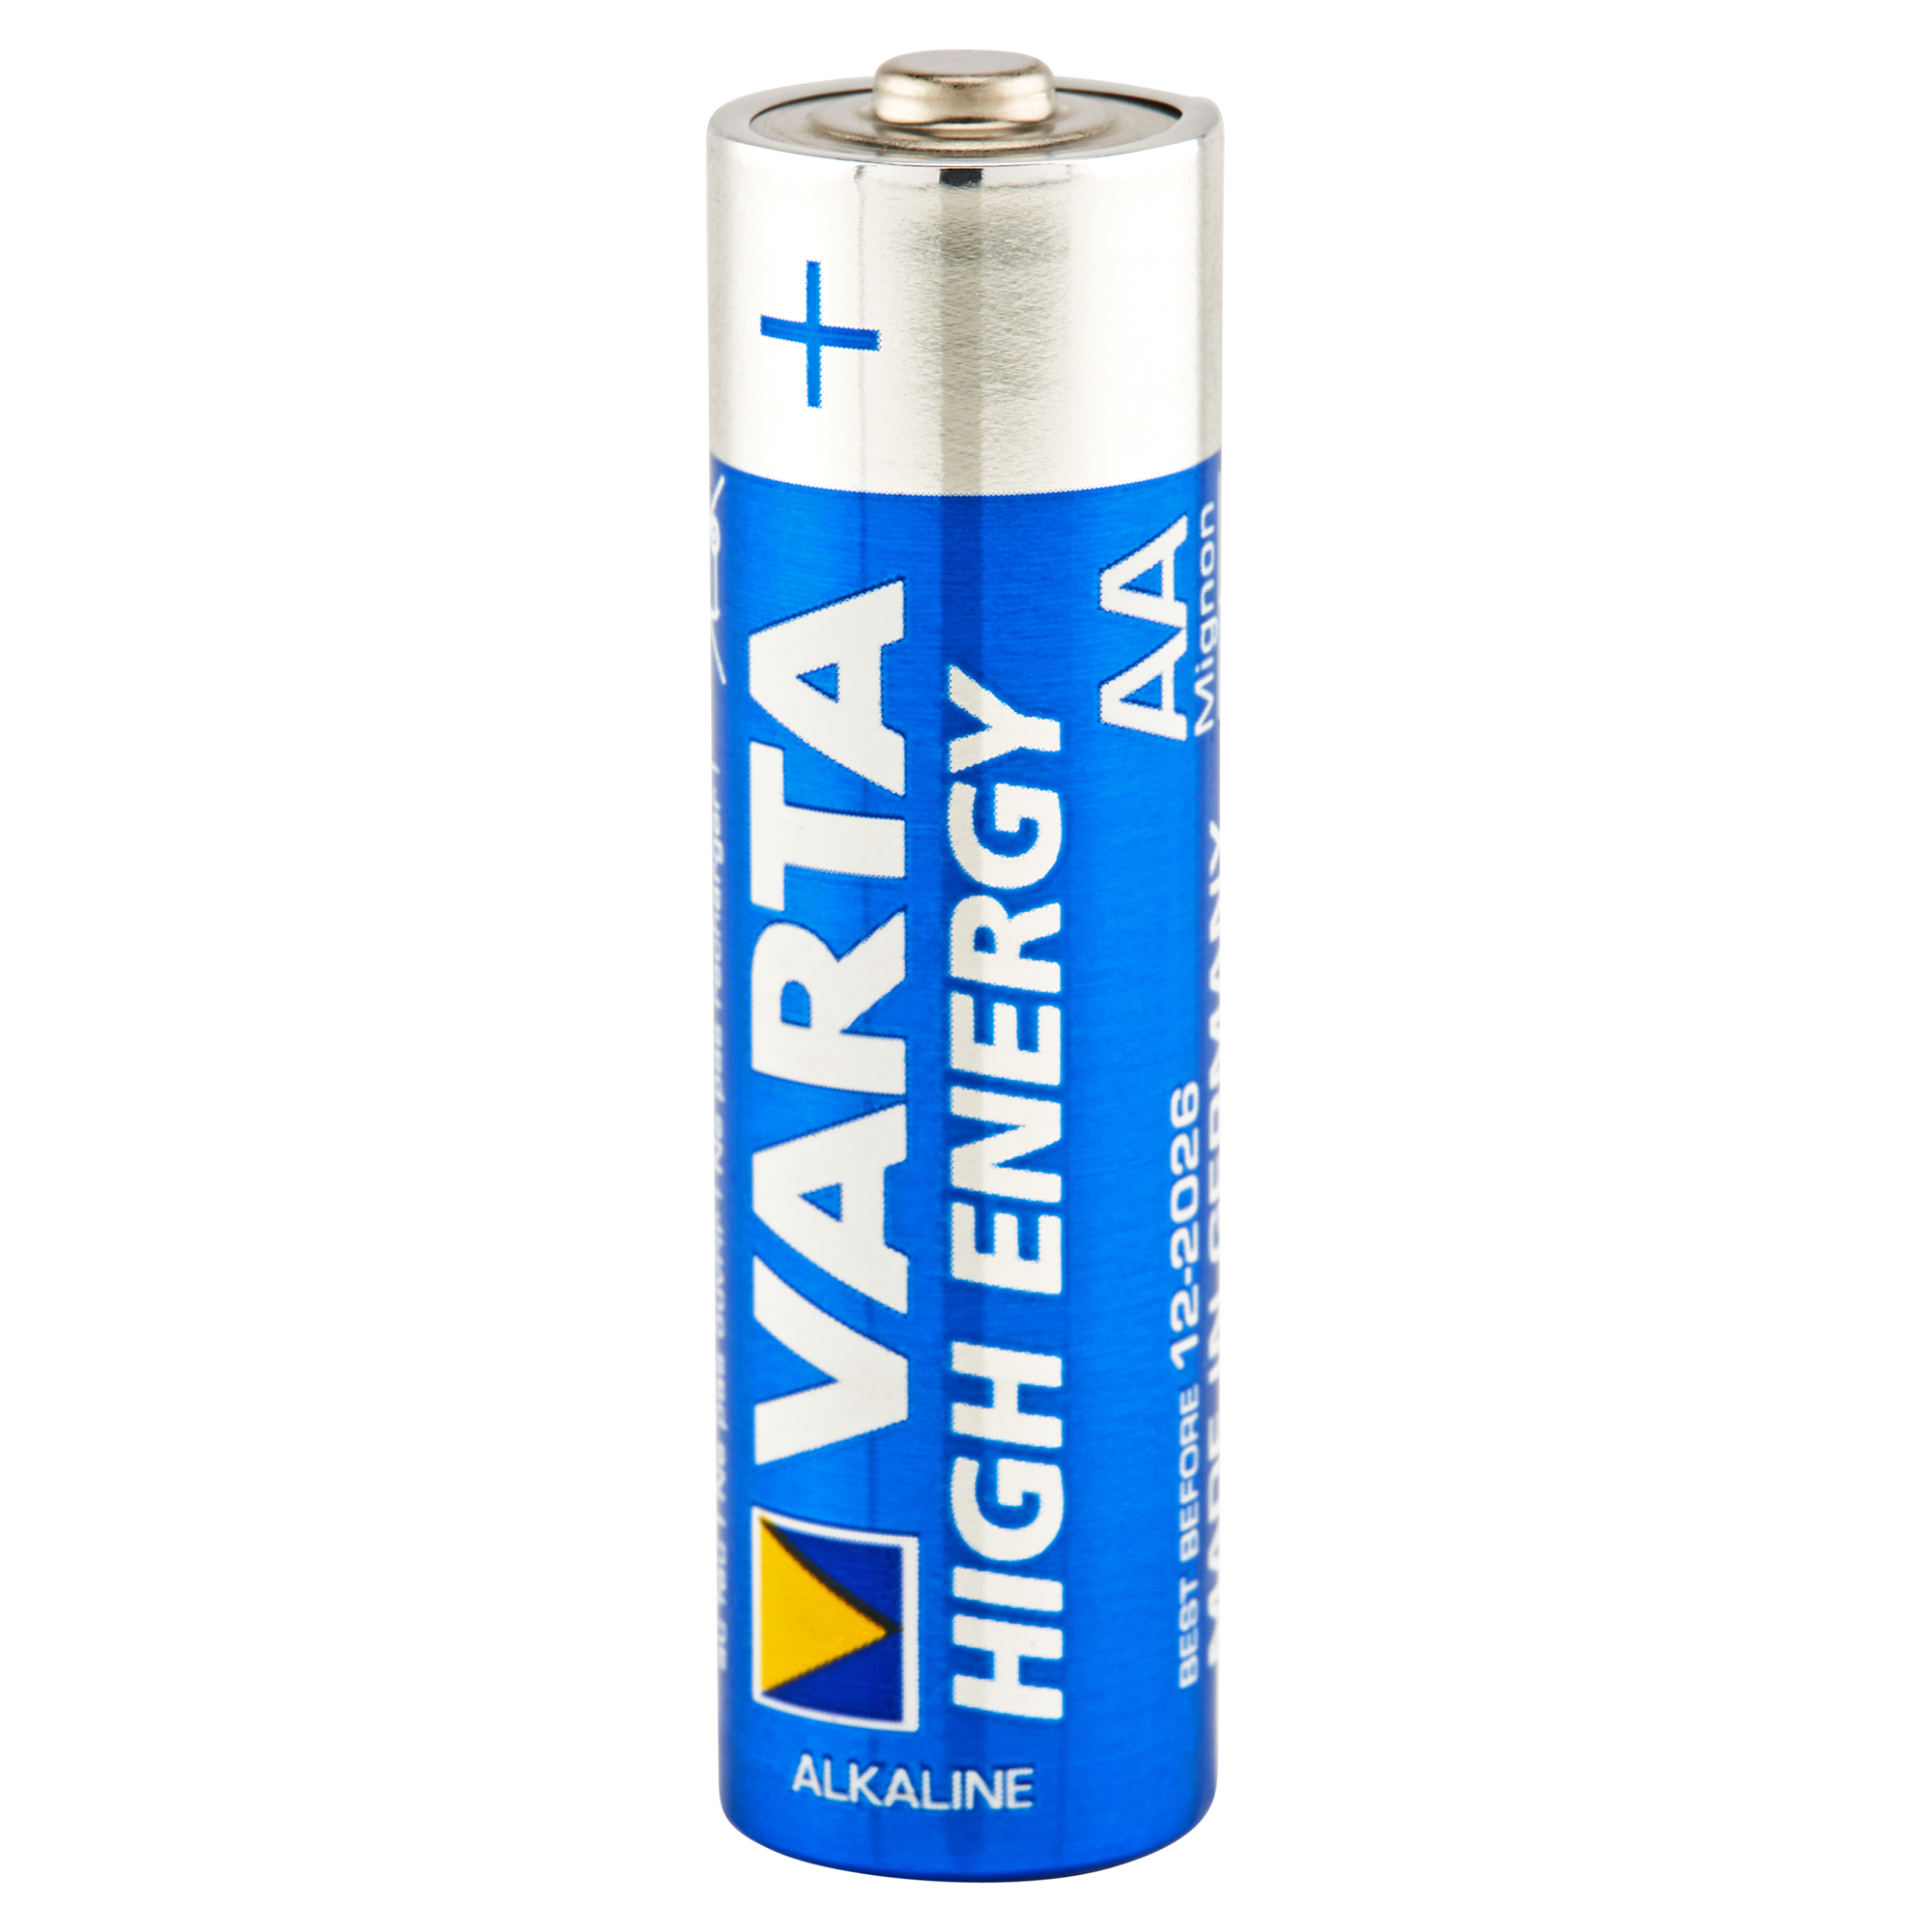 Batterien High Energy AA Alkaline 10 Stück + product picture